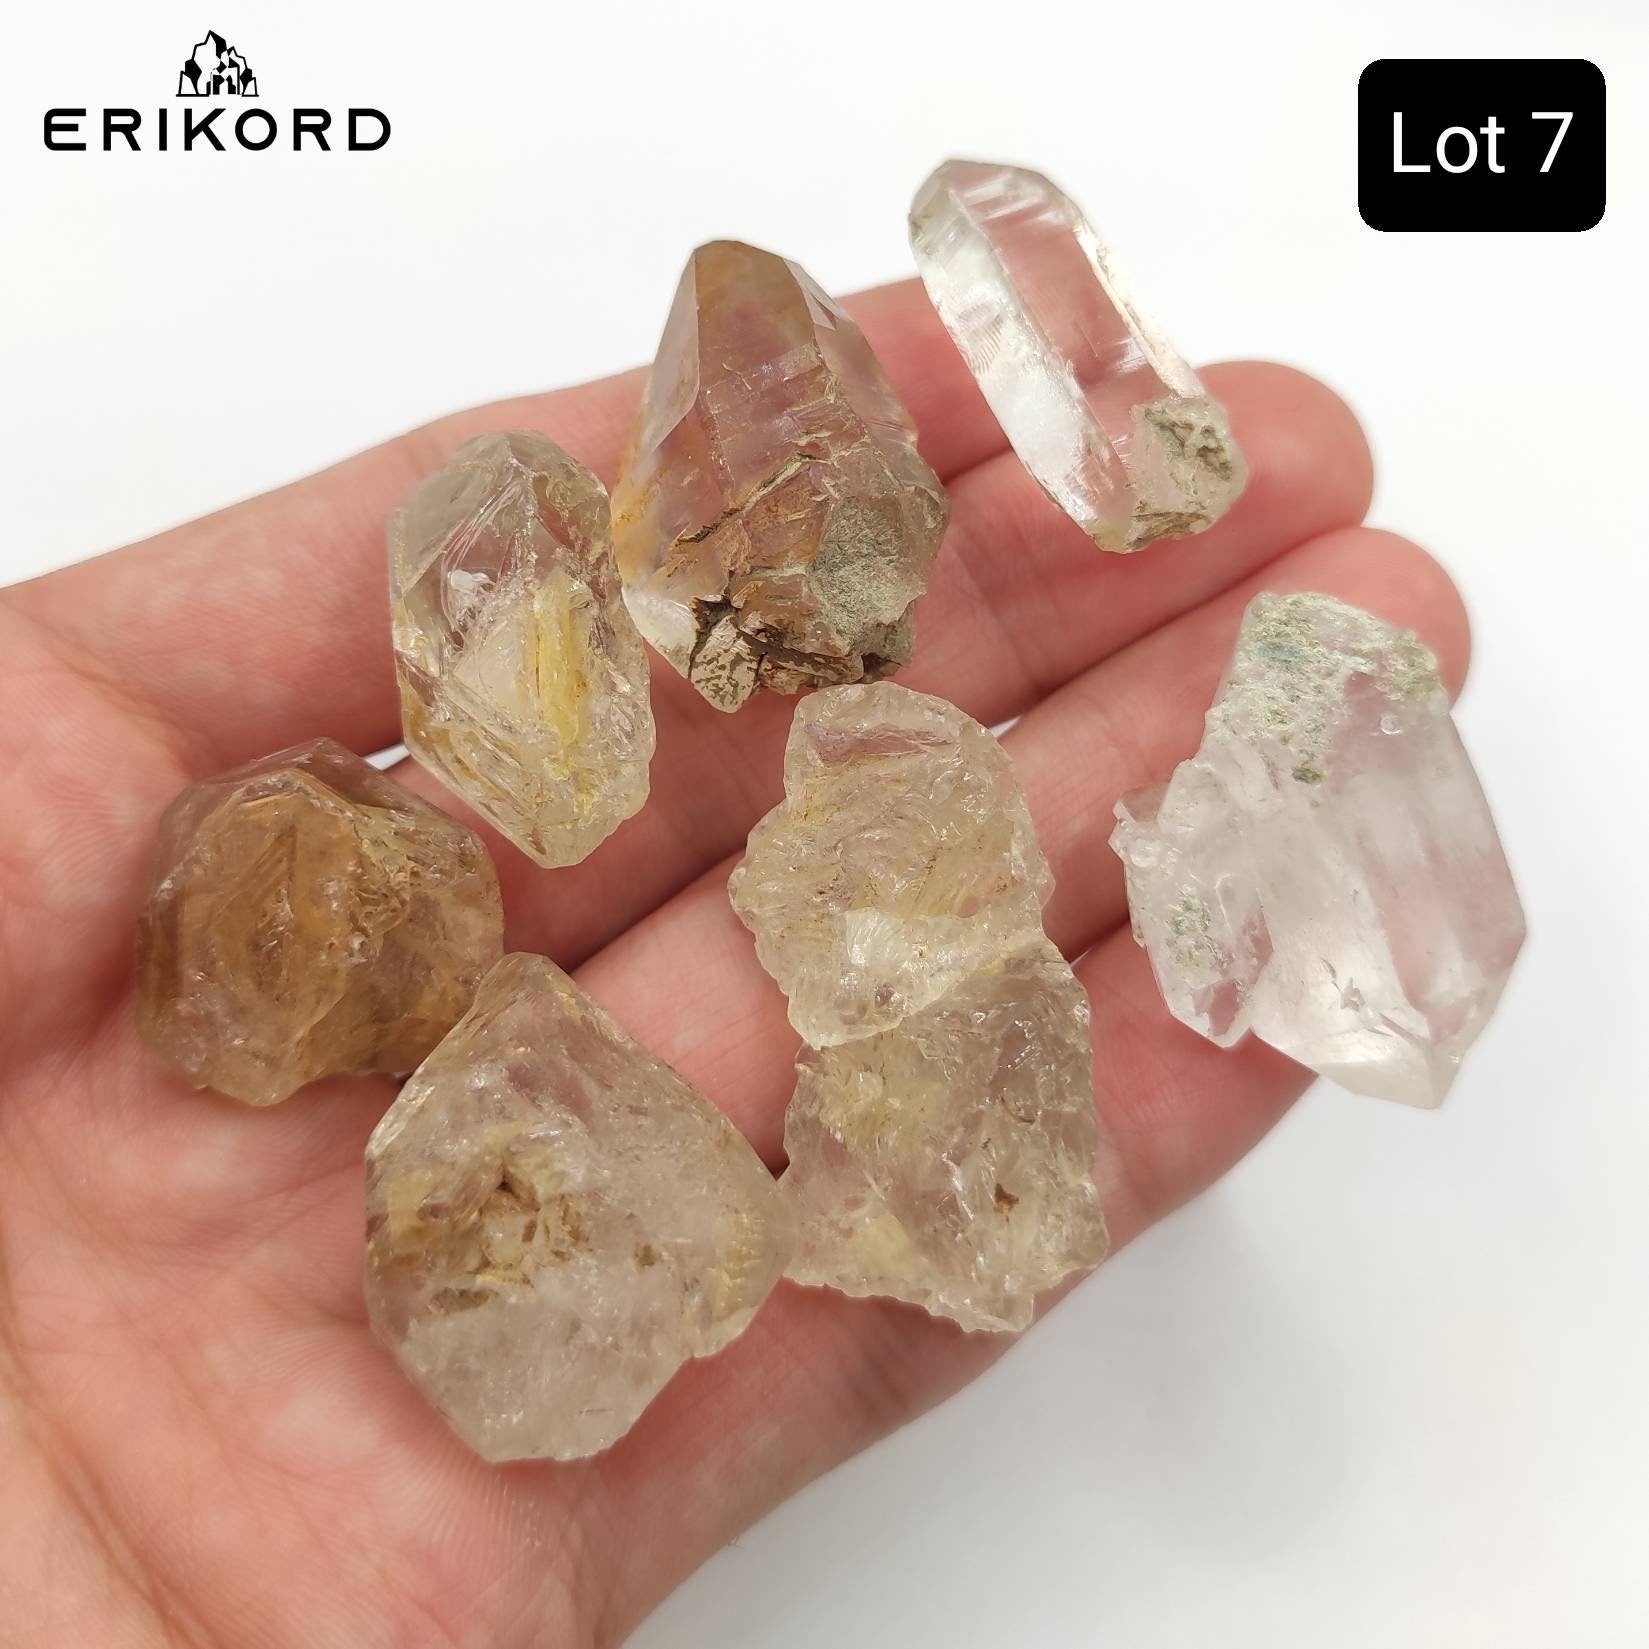 Unique Lots - Natural Smoky Quartz Points - Yellow Quartz Crystals - Raw Crystal Points from Pakistan - Untreated Rough Clear Quartz Lot